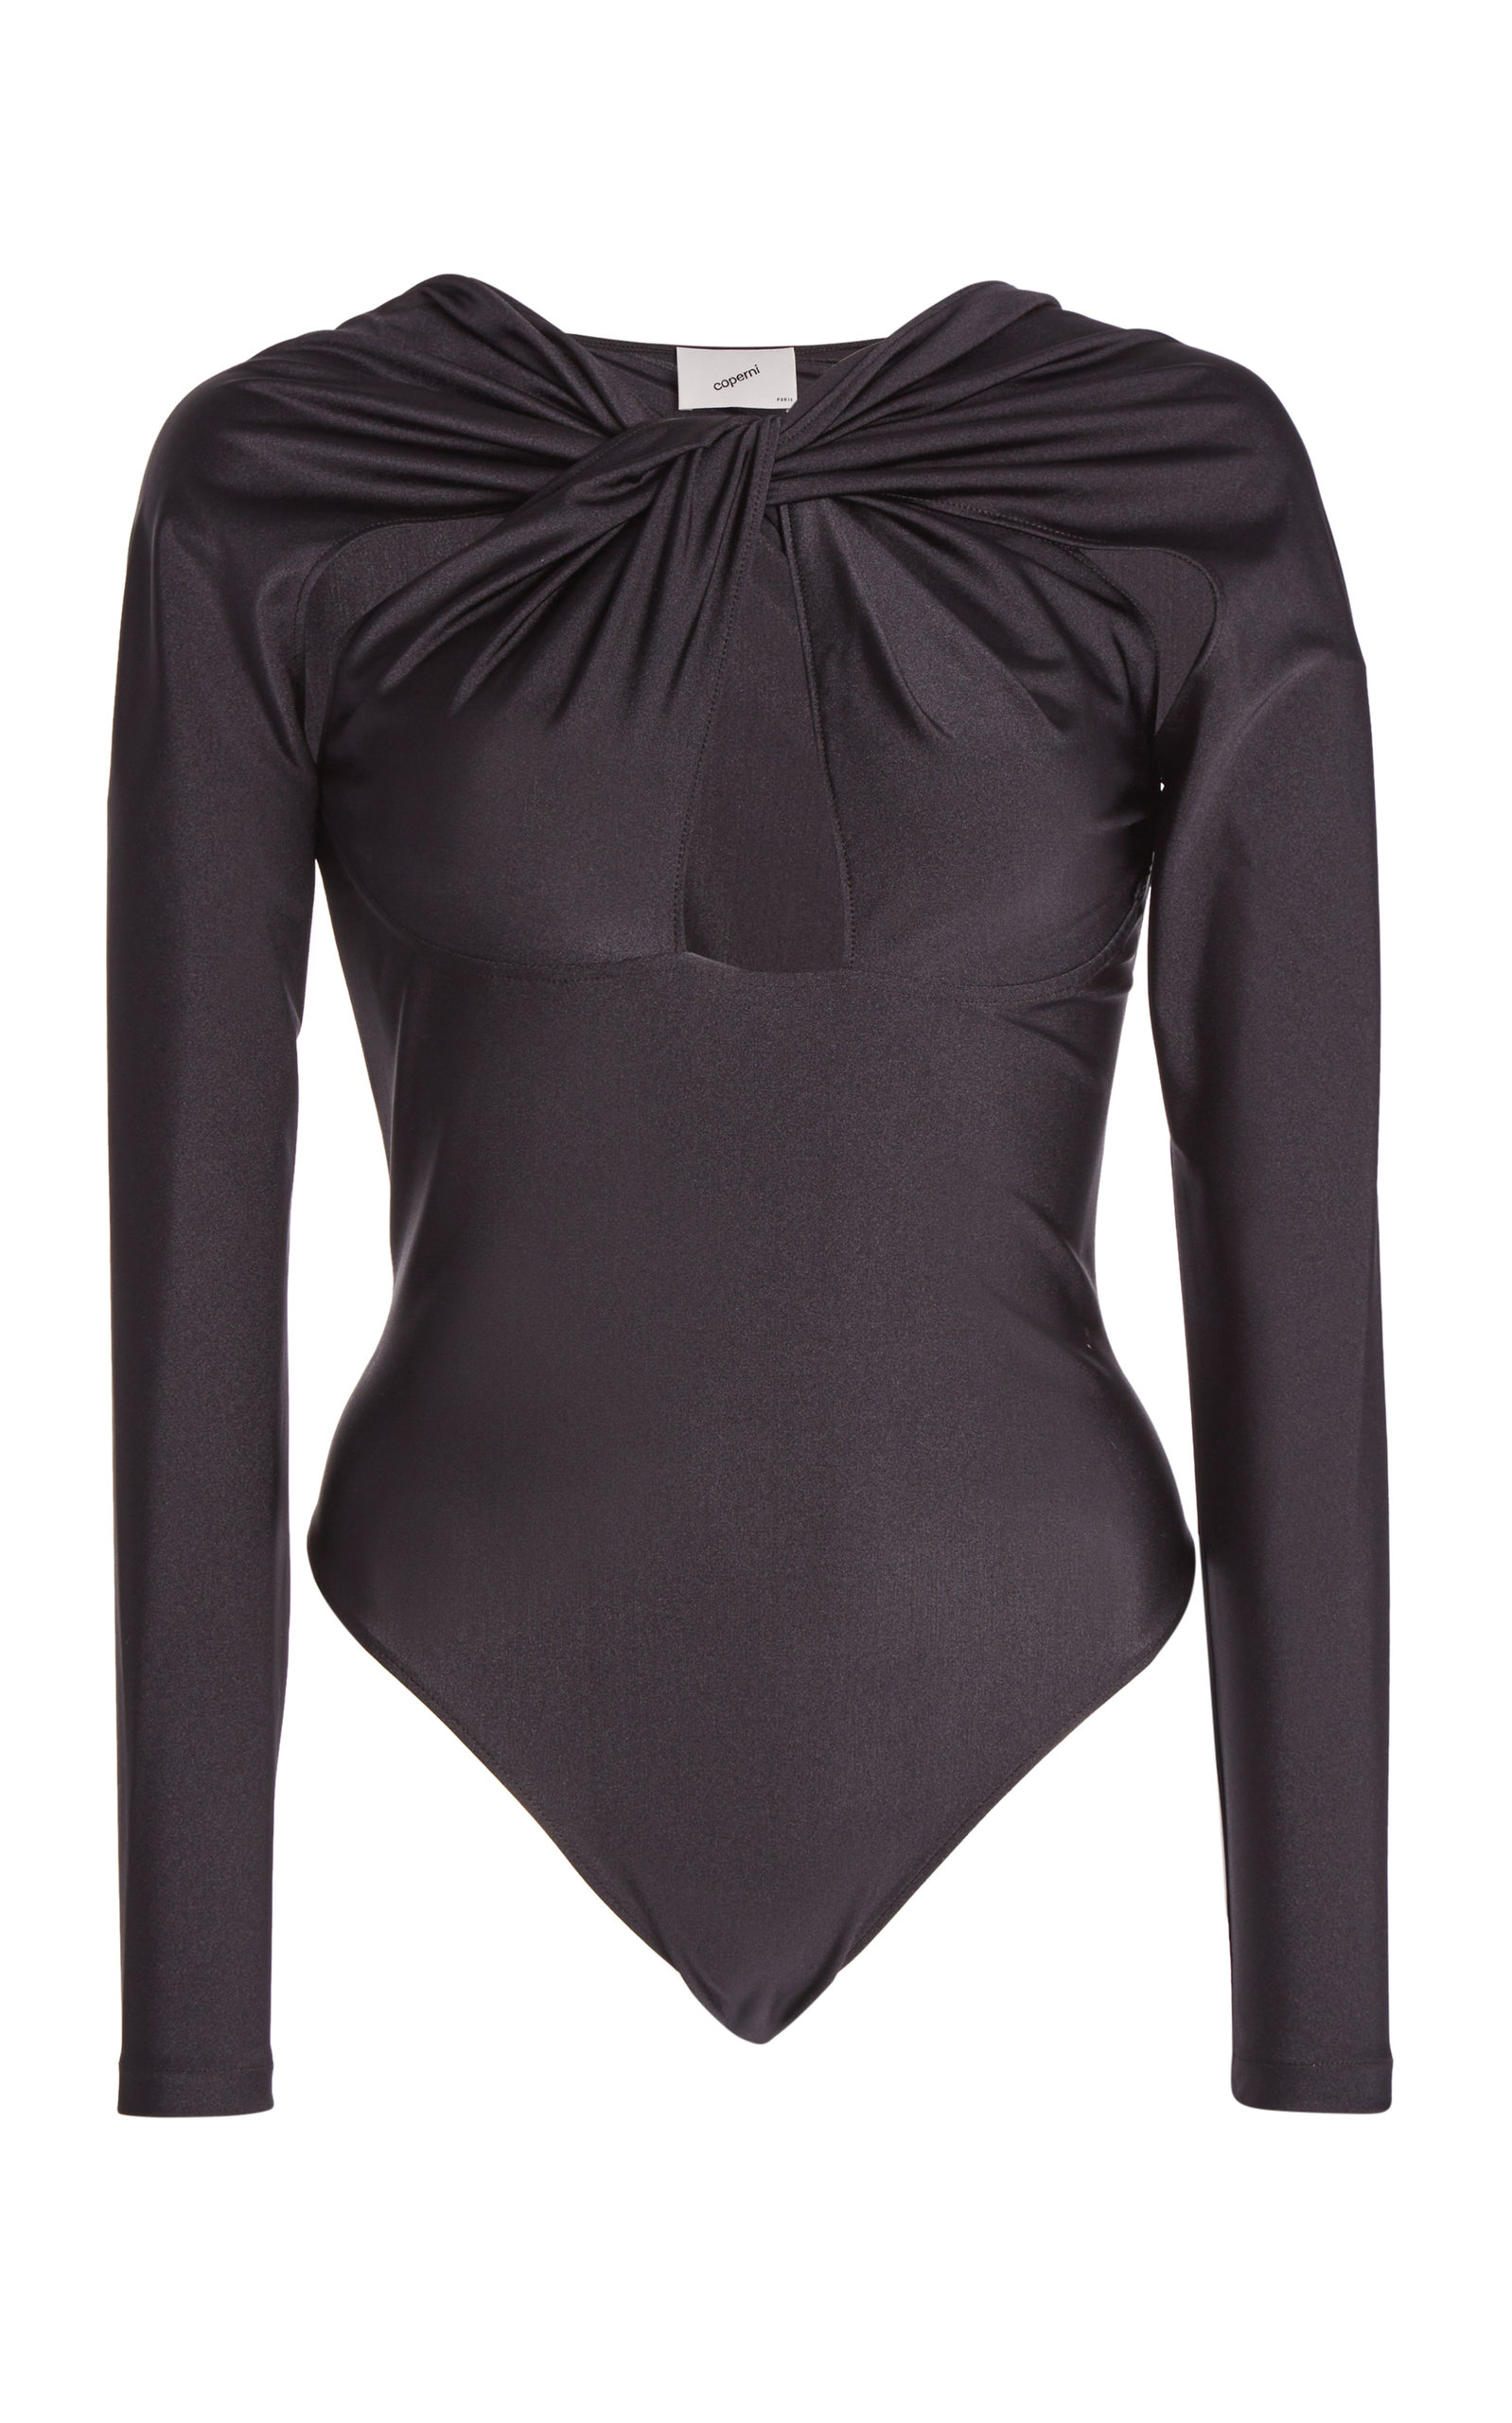 Coperni - Women's Twisted Cut Out Jersey Bodysuit - Black - Only At Moda Operandi